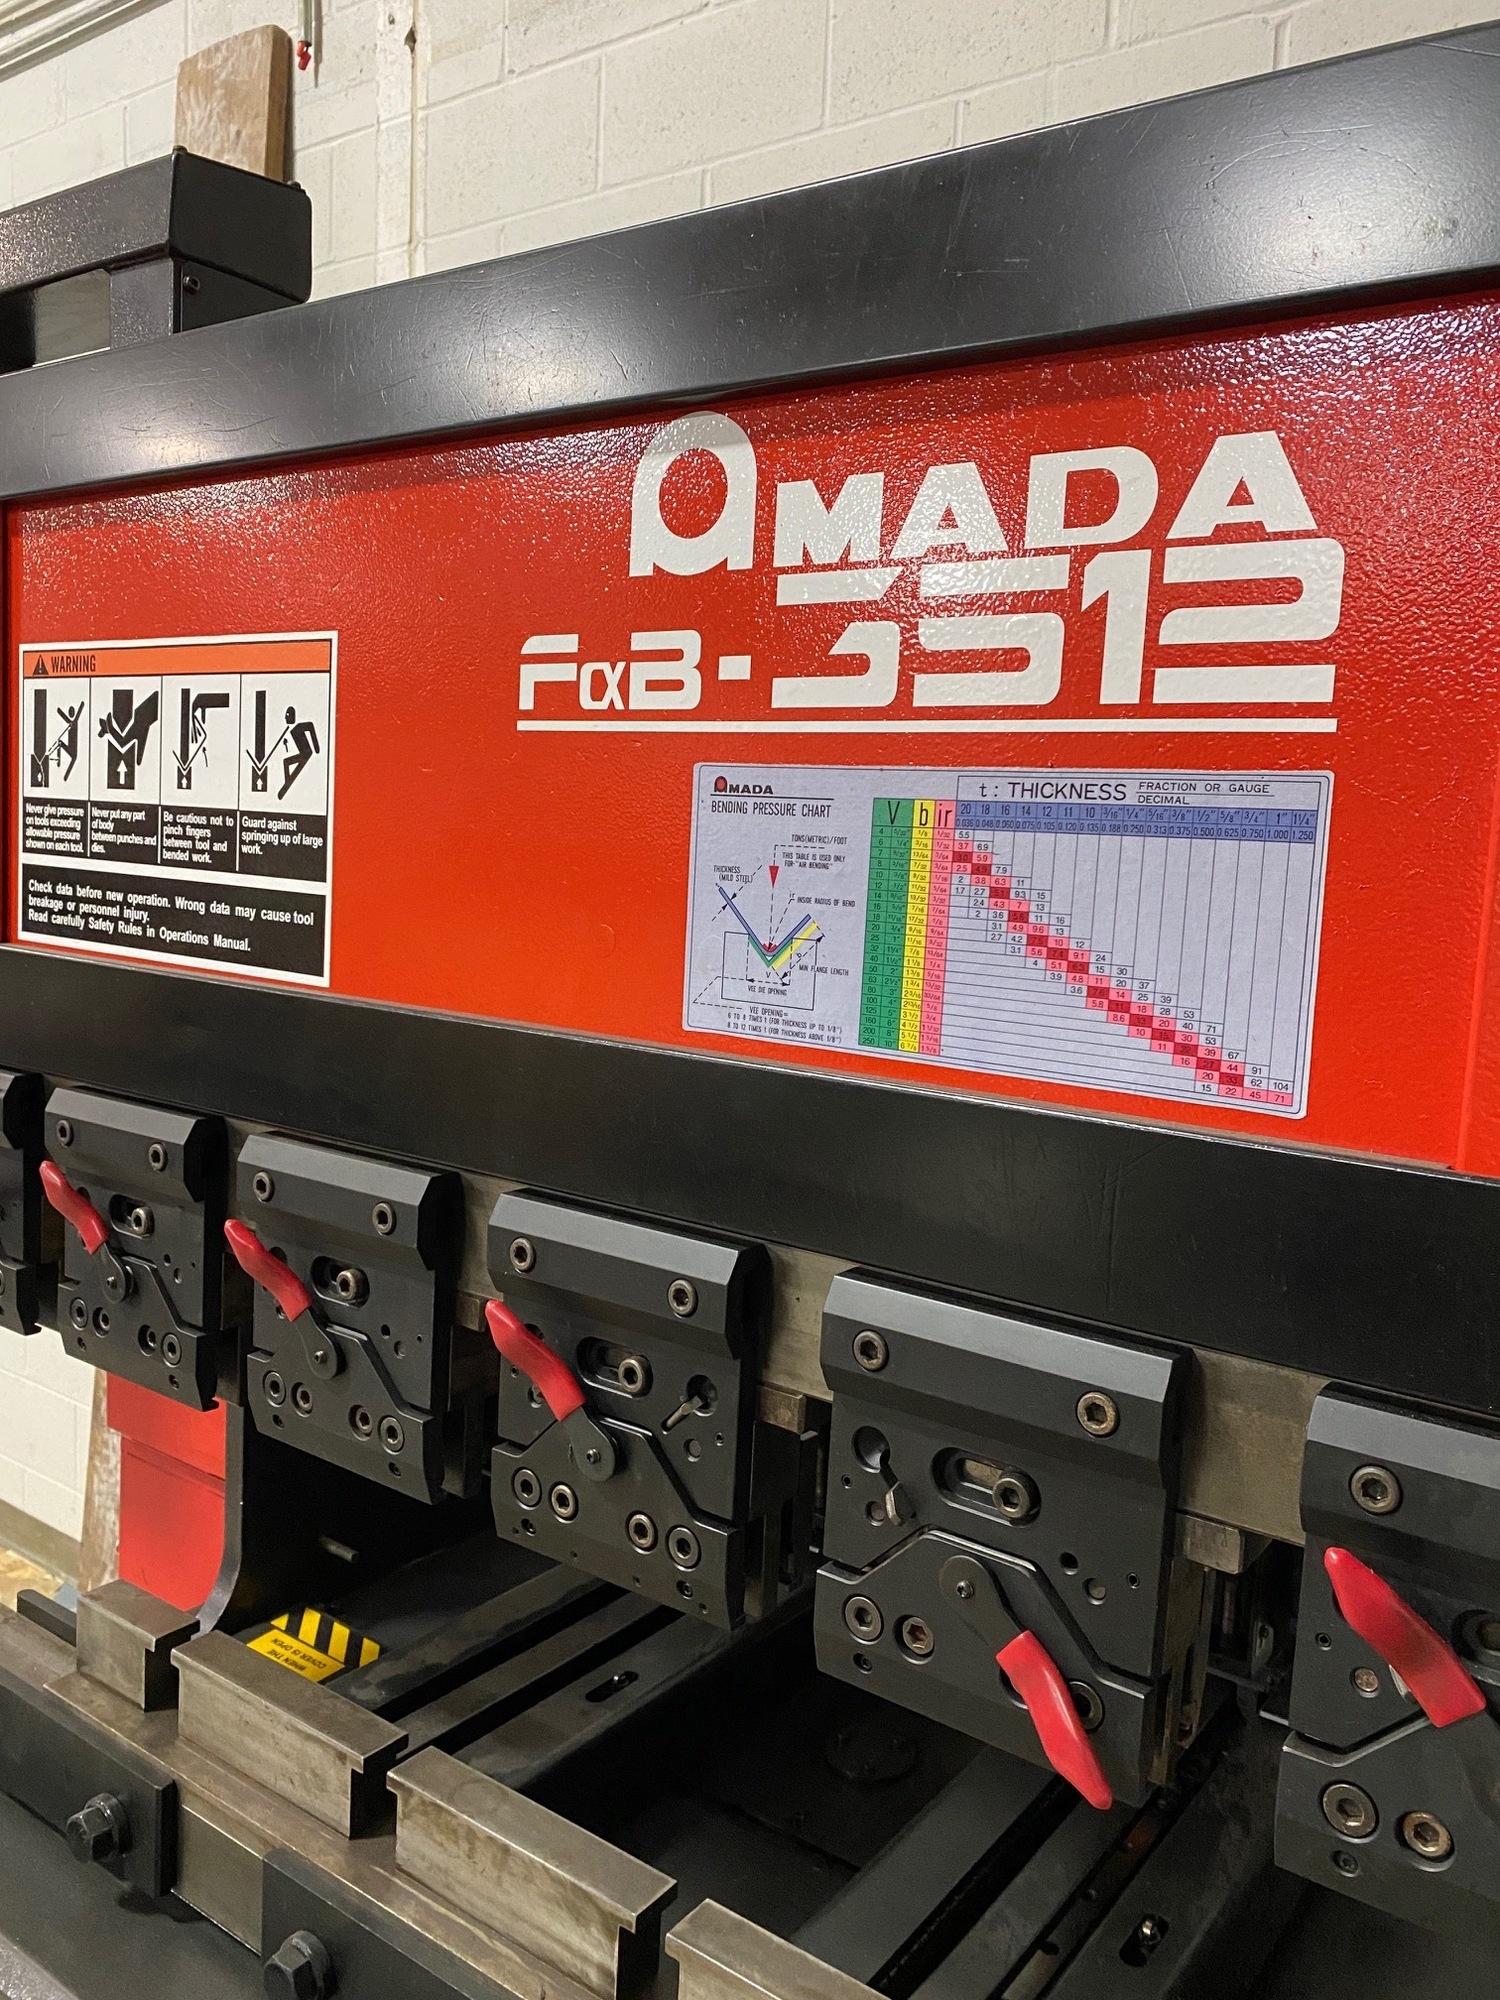 1994 AMADA FBD 3512 EX-II CNC Press Brakes | MacLean Machinery Network LLC